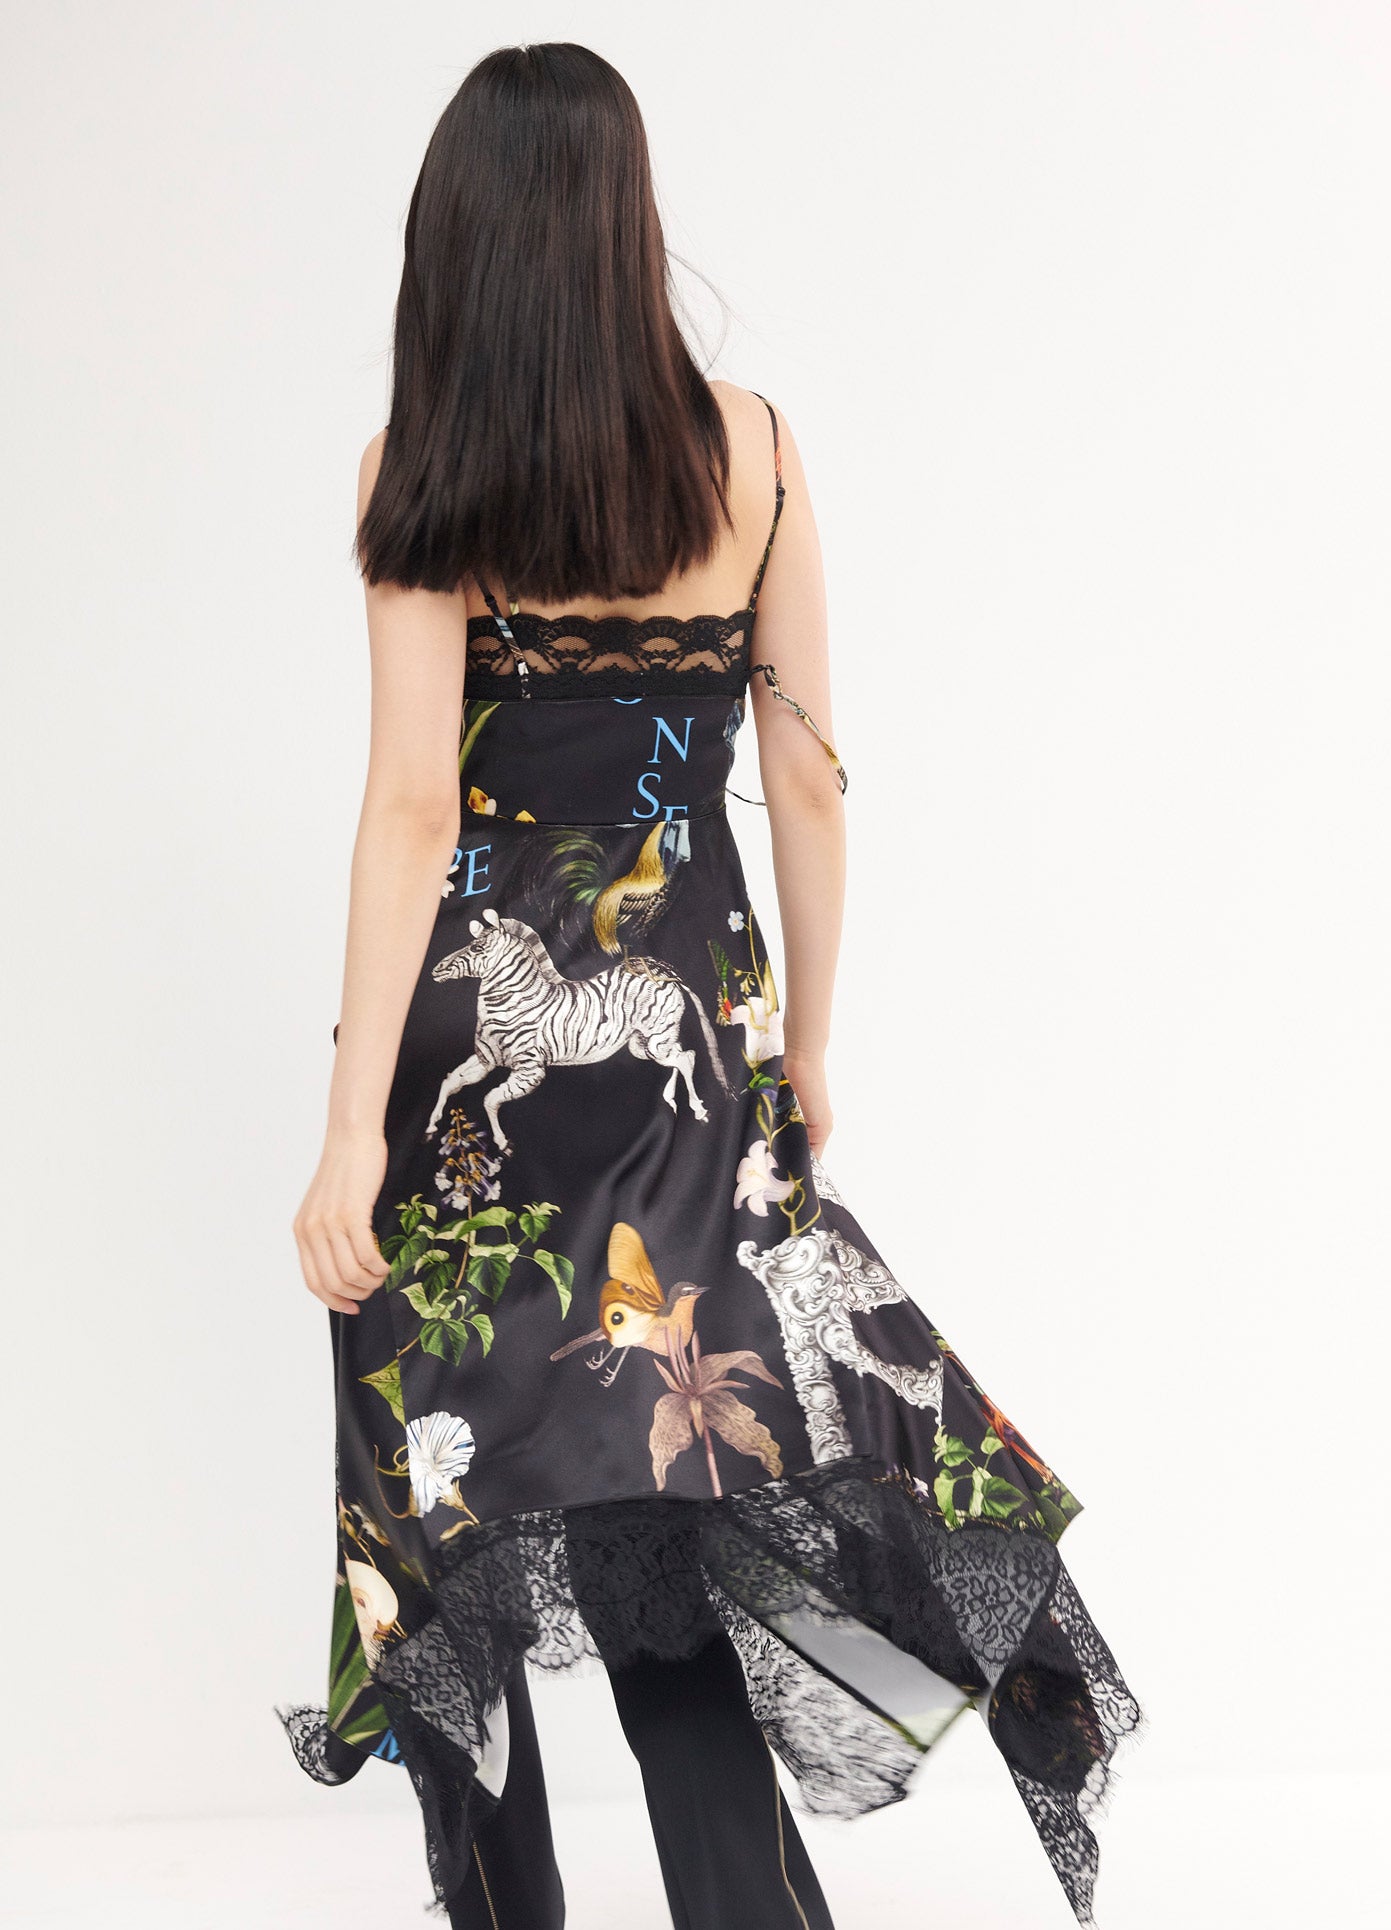 MONSE Print Lace Slip Dress in Black Multi on Model Walking Back View